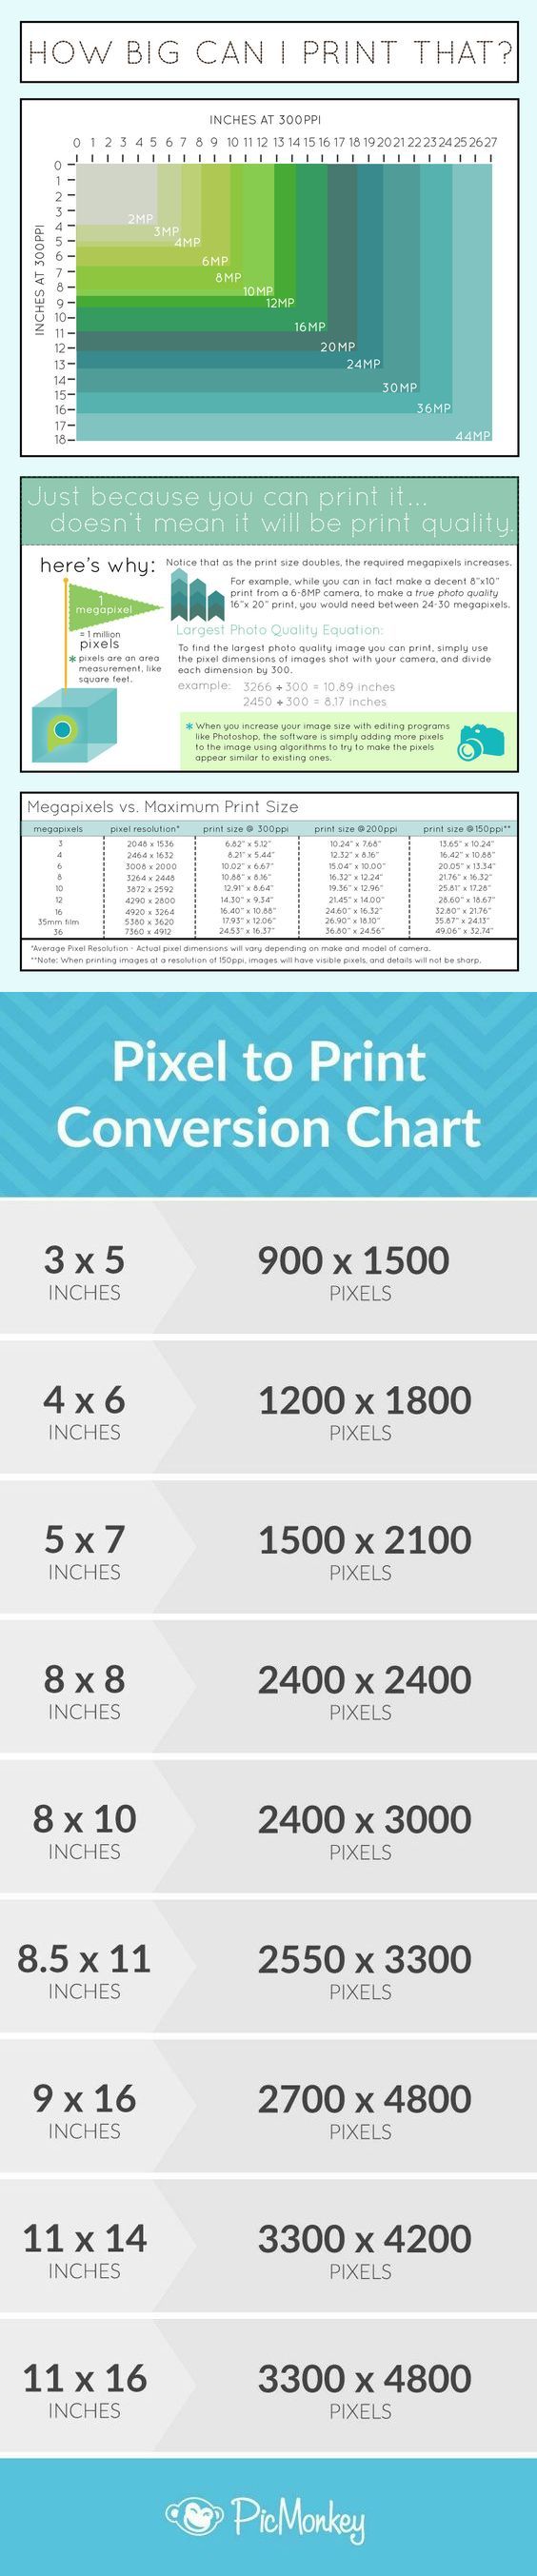 Photographic Print Size Chart